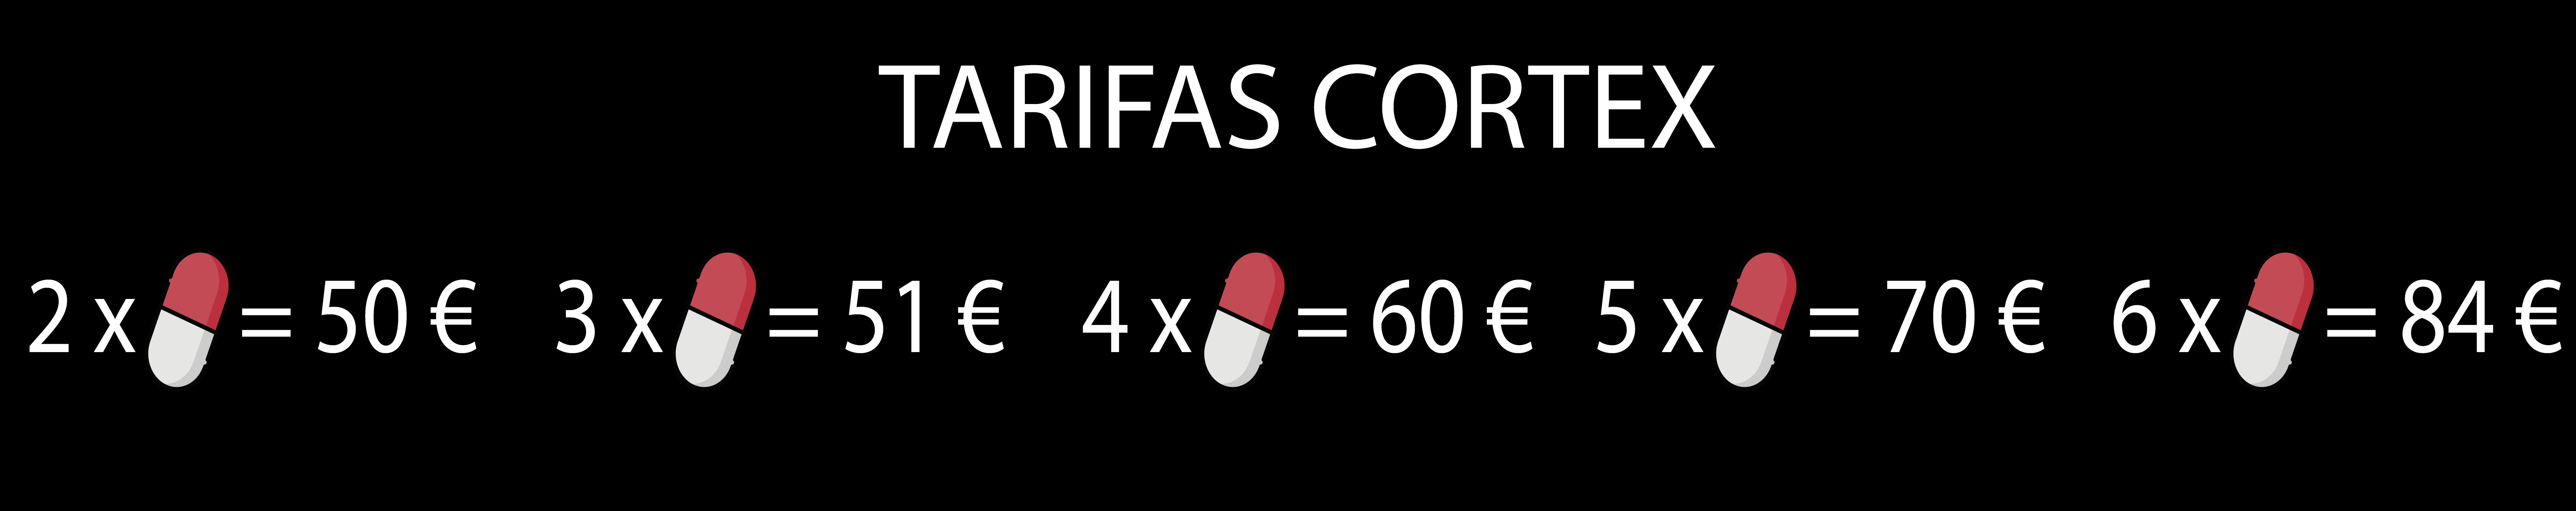 Tarifas_Cortex